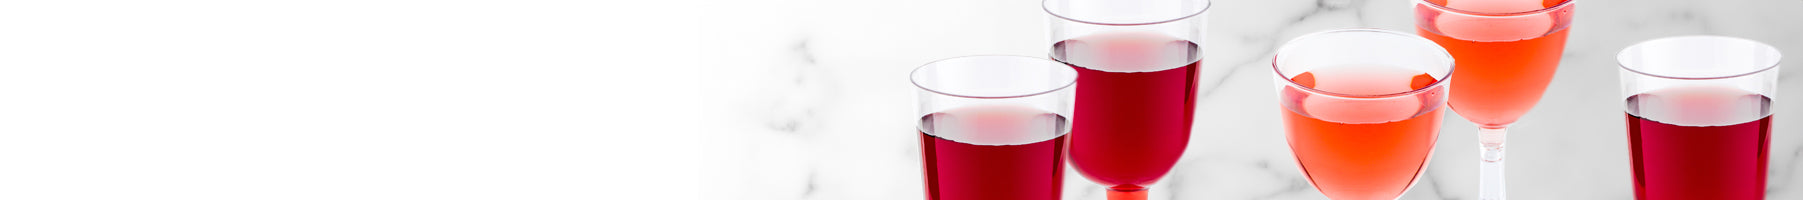 Banner_Disposables_Drinkware_Wine-Glasses_127